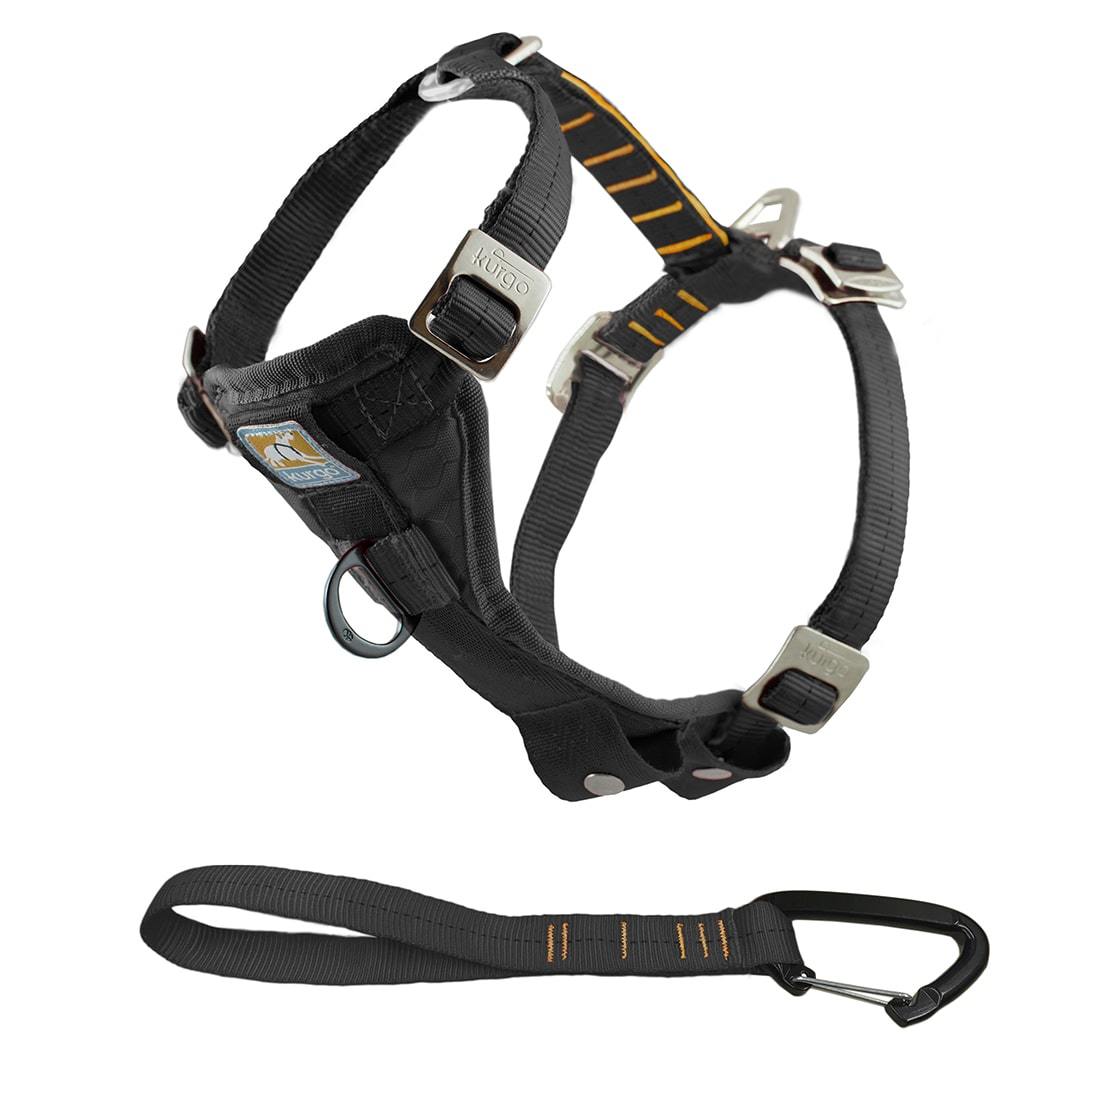 Enhanced Strength Kurgo Trufit Dog Harness